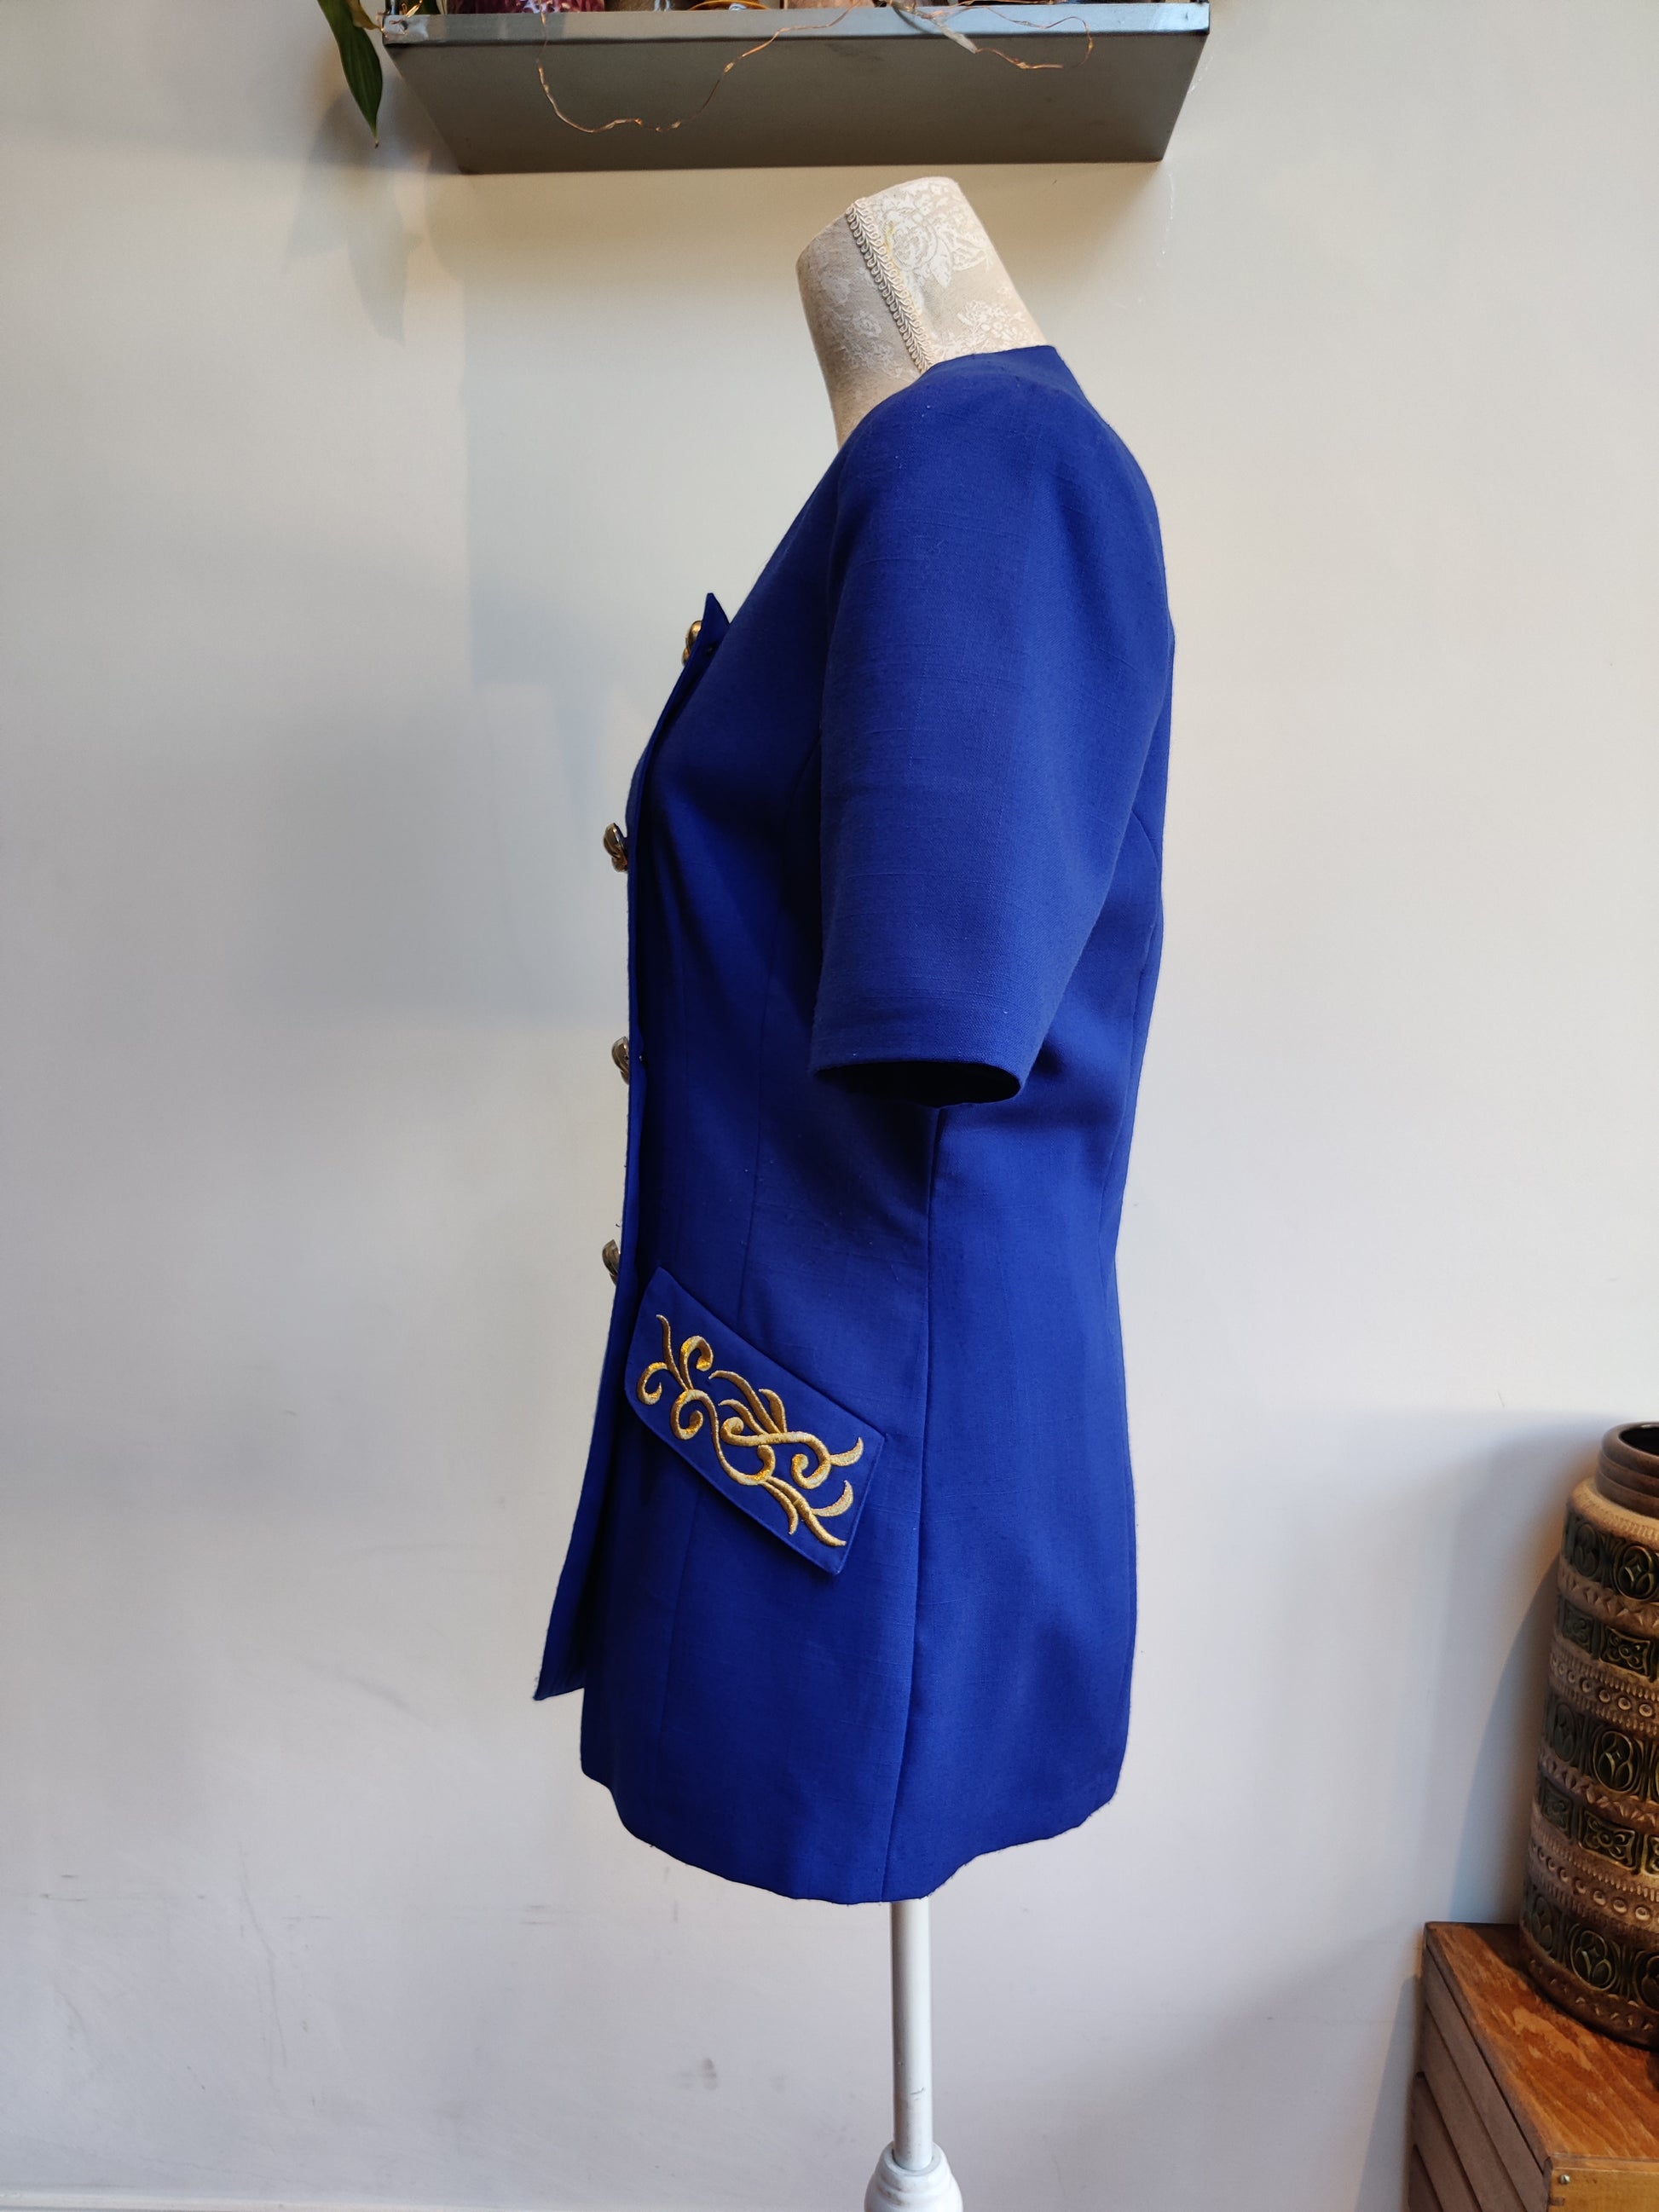 Berkatex blue jacket. 80s style size 12.